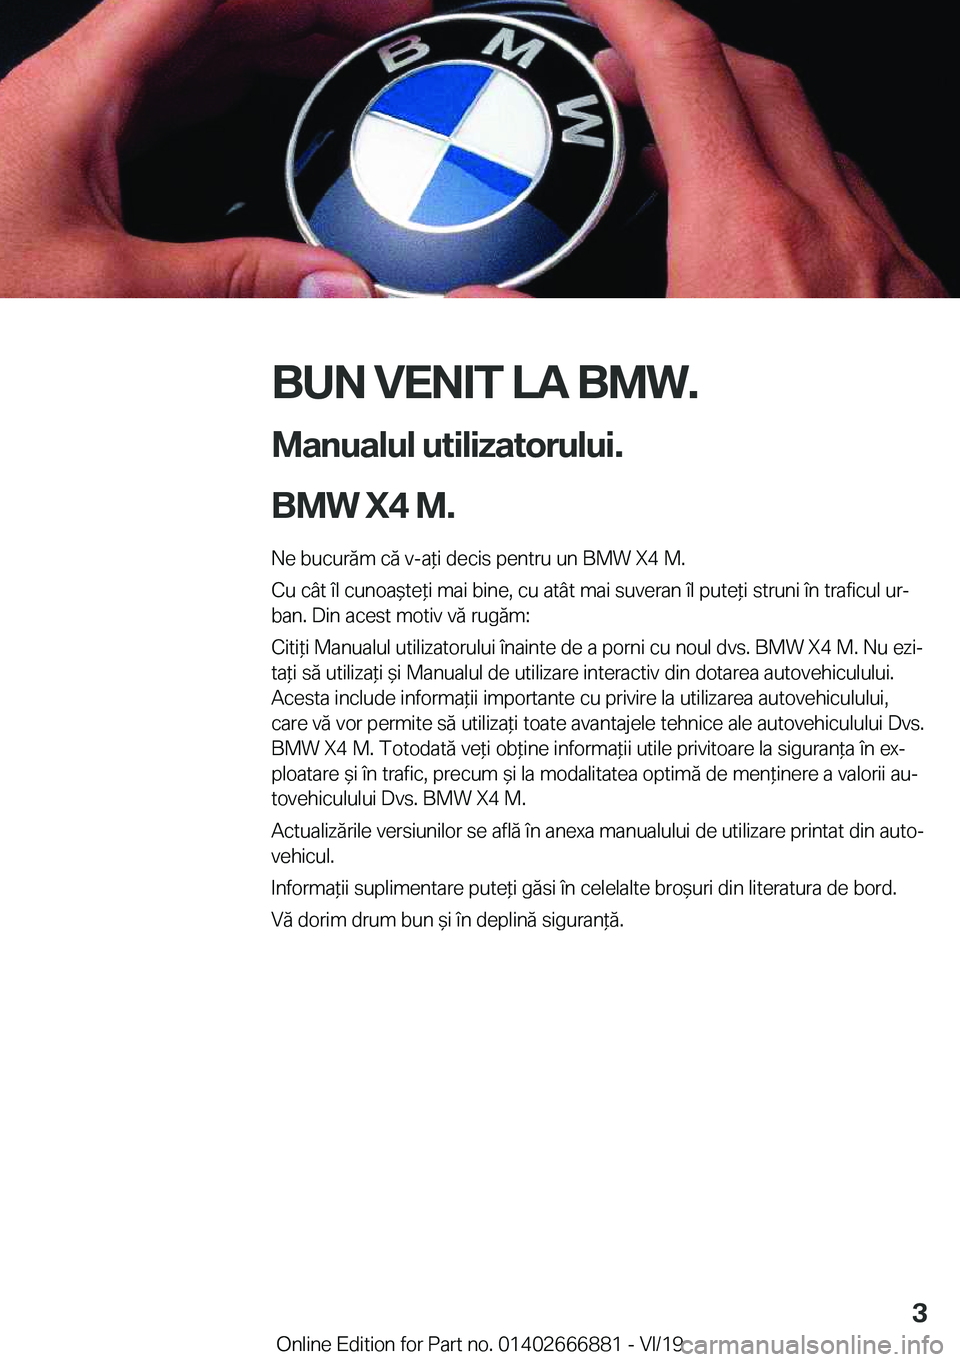 BMW X4 M 2020  Ghiduri De Utilizare (in Romanian) �B�U�N��V�E�N�I�T��L�A��B�M�W�.�M�a�n�u�a�l�u�l��u�t�i�l�i�z�a�t�o�r�u�l�u�i�.
�B�M�W��X�4��M�. �N�e��b�u�c�u�r�